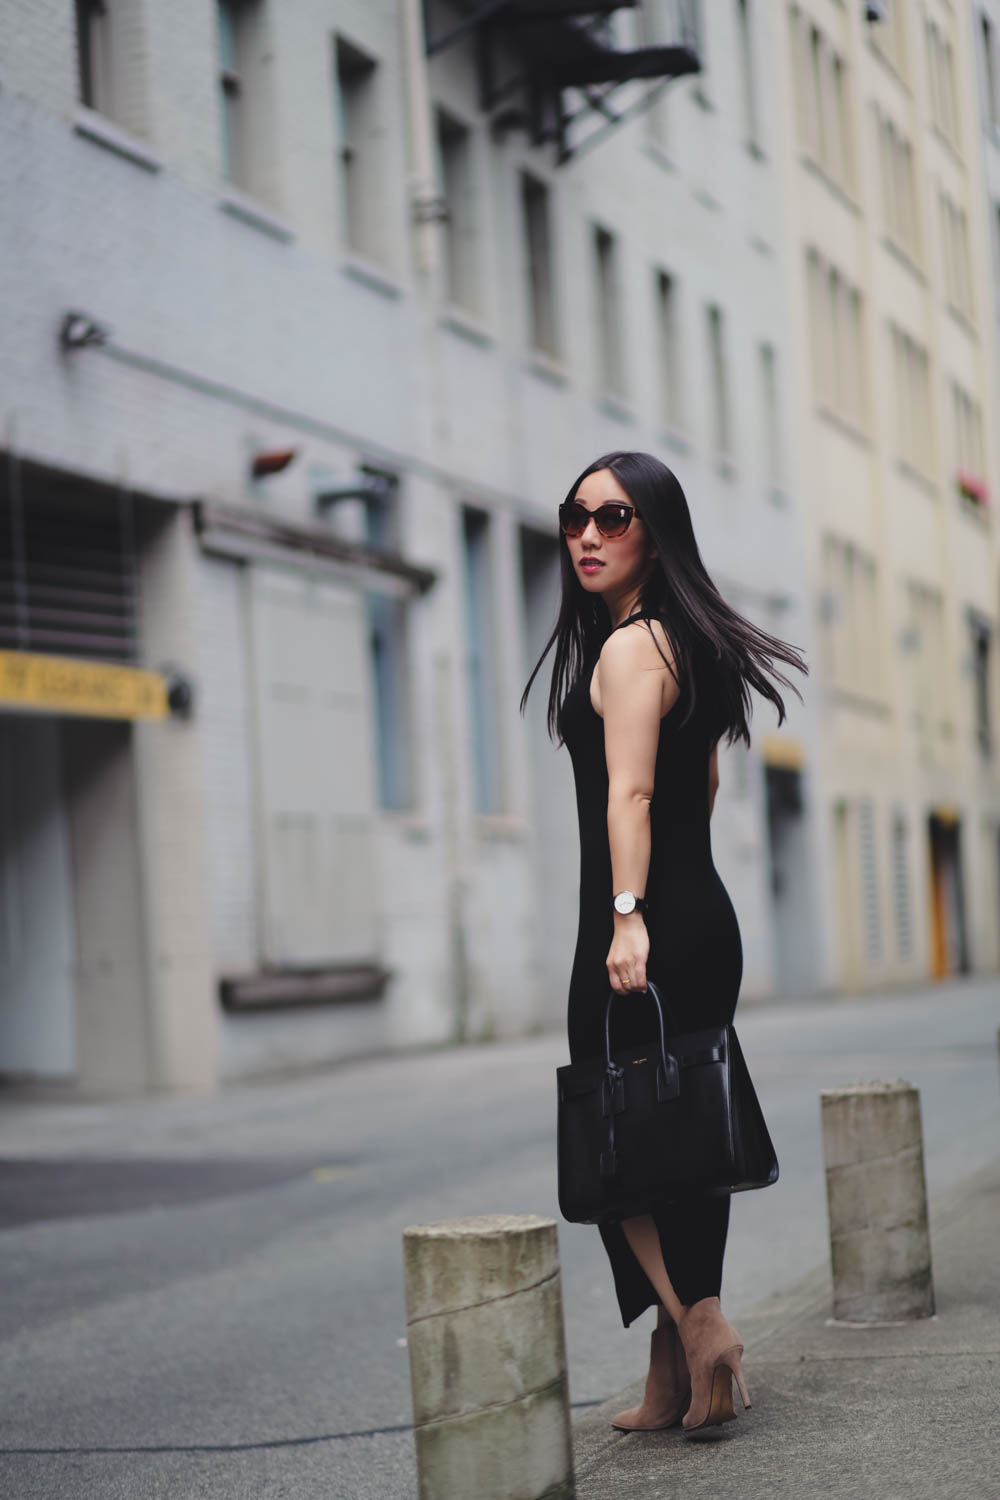 Jenny Liu, Vancouver Fashion Blogger. Wearing Vince Camuto Suede Booties, Saint Laurent Sac De Jour tote, and a Stem dress.